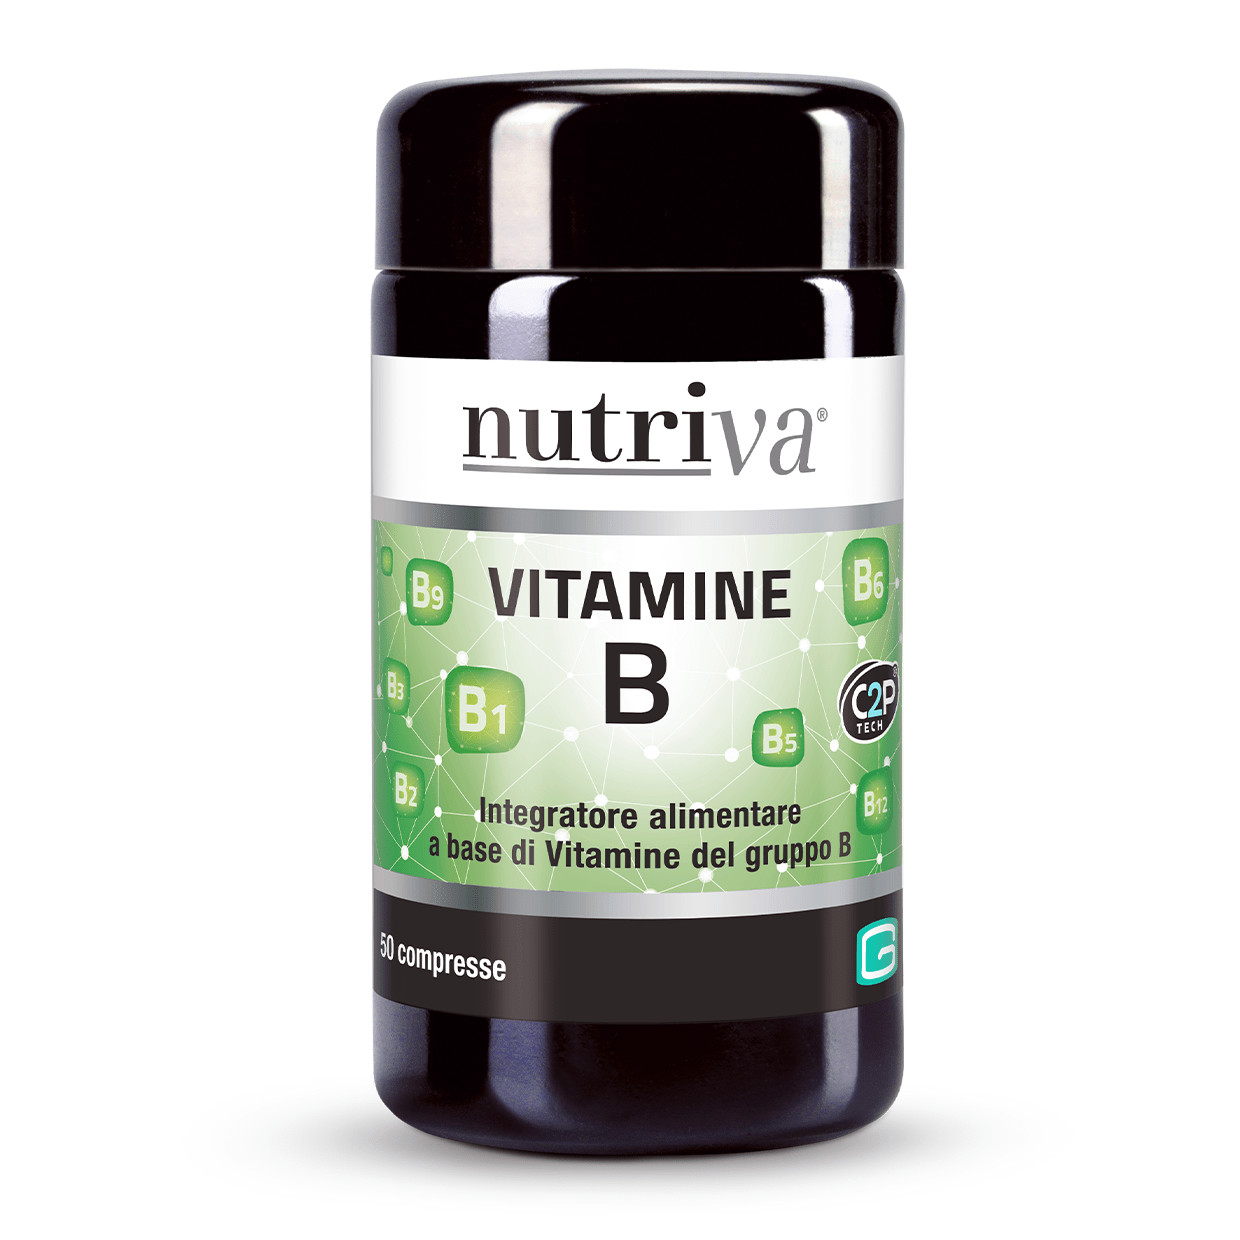 938651611 - Nutriva Vitamine B Integratore 50 compresse - 4724351_2.jpg